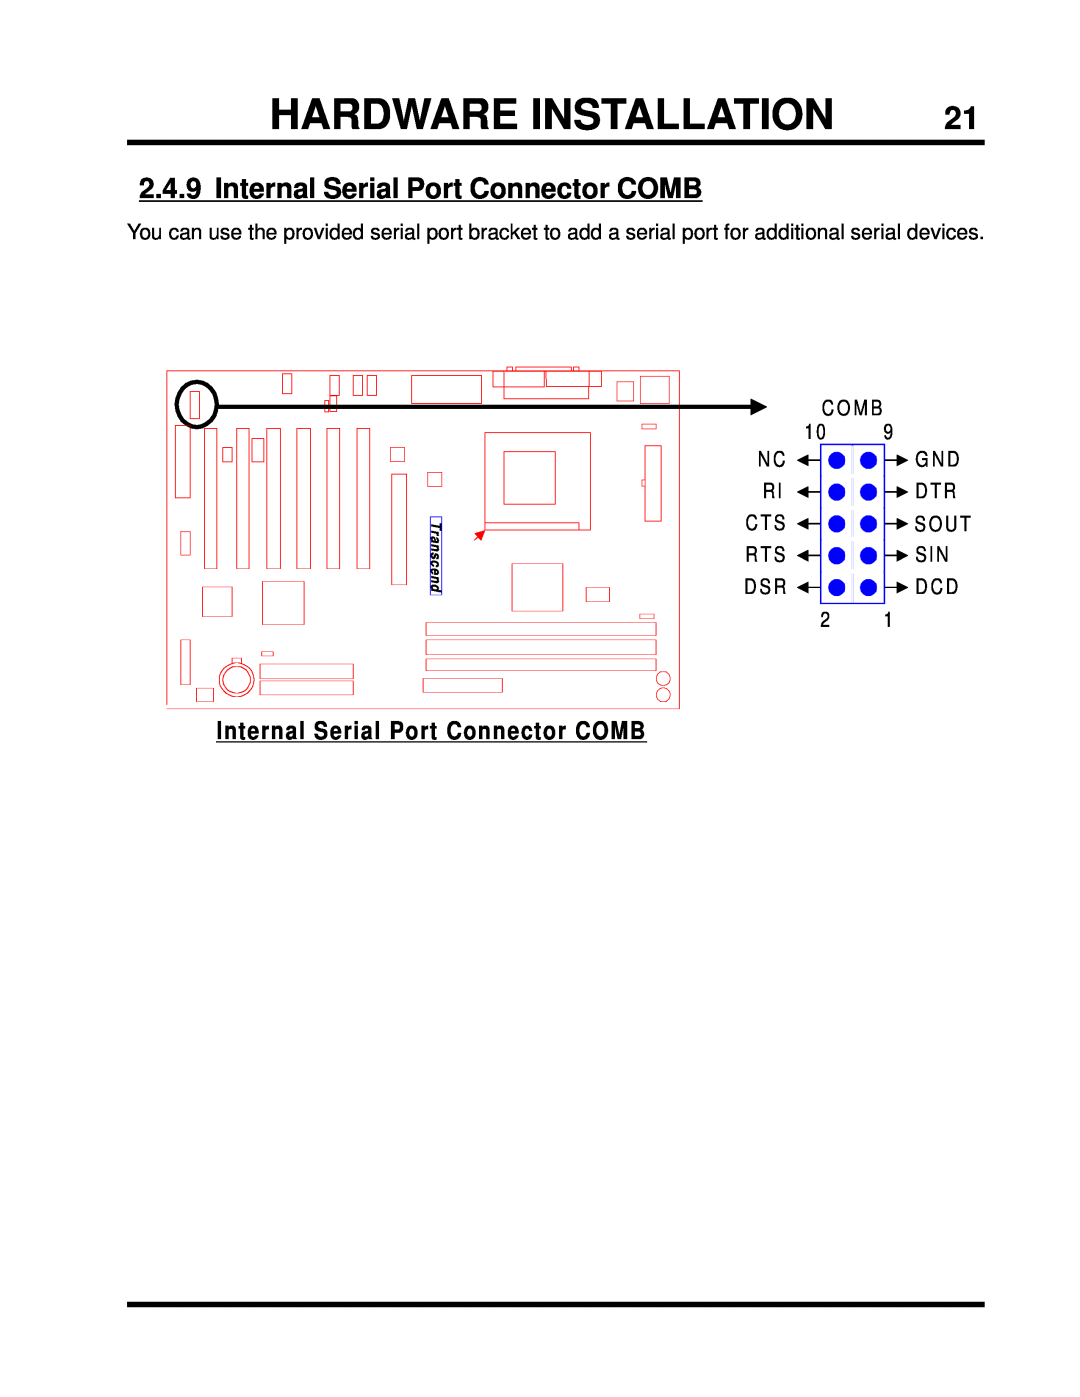 Intel TS-ASP3 user manual Internal Serial Port Connector COMB, Hardware Installation 